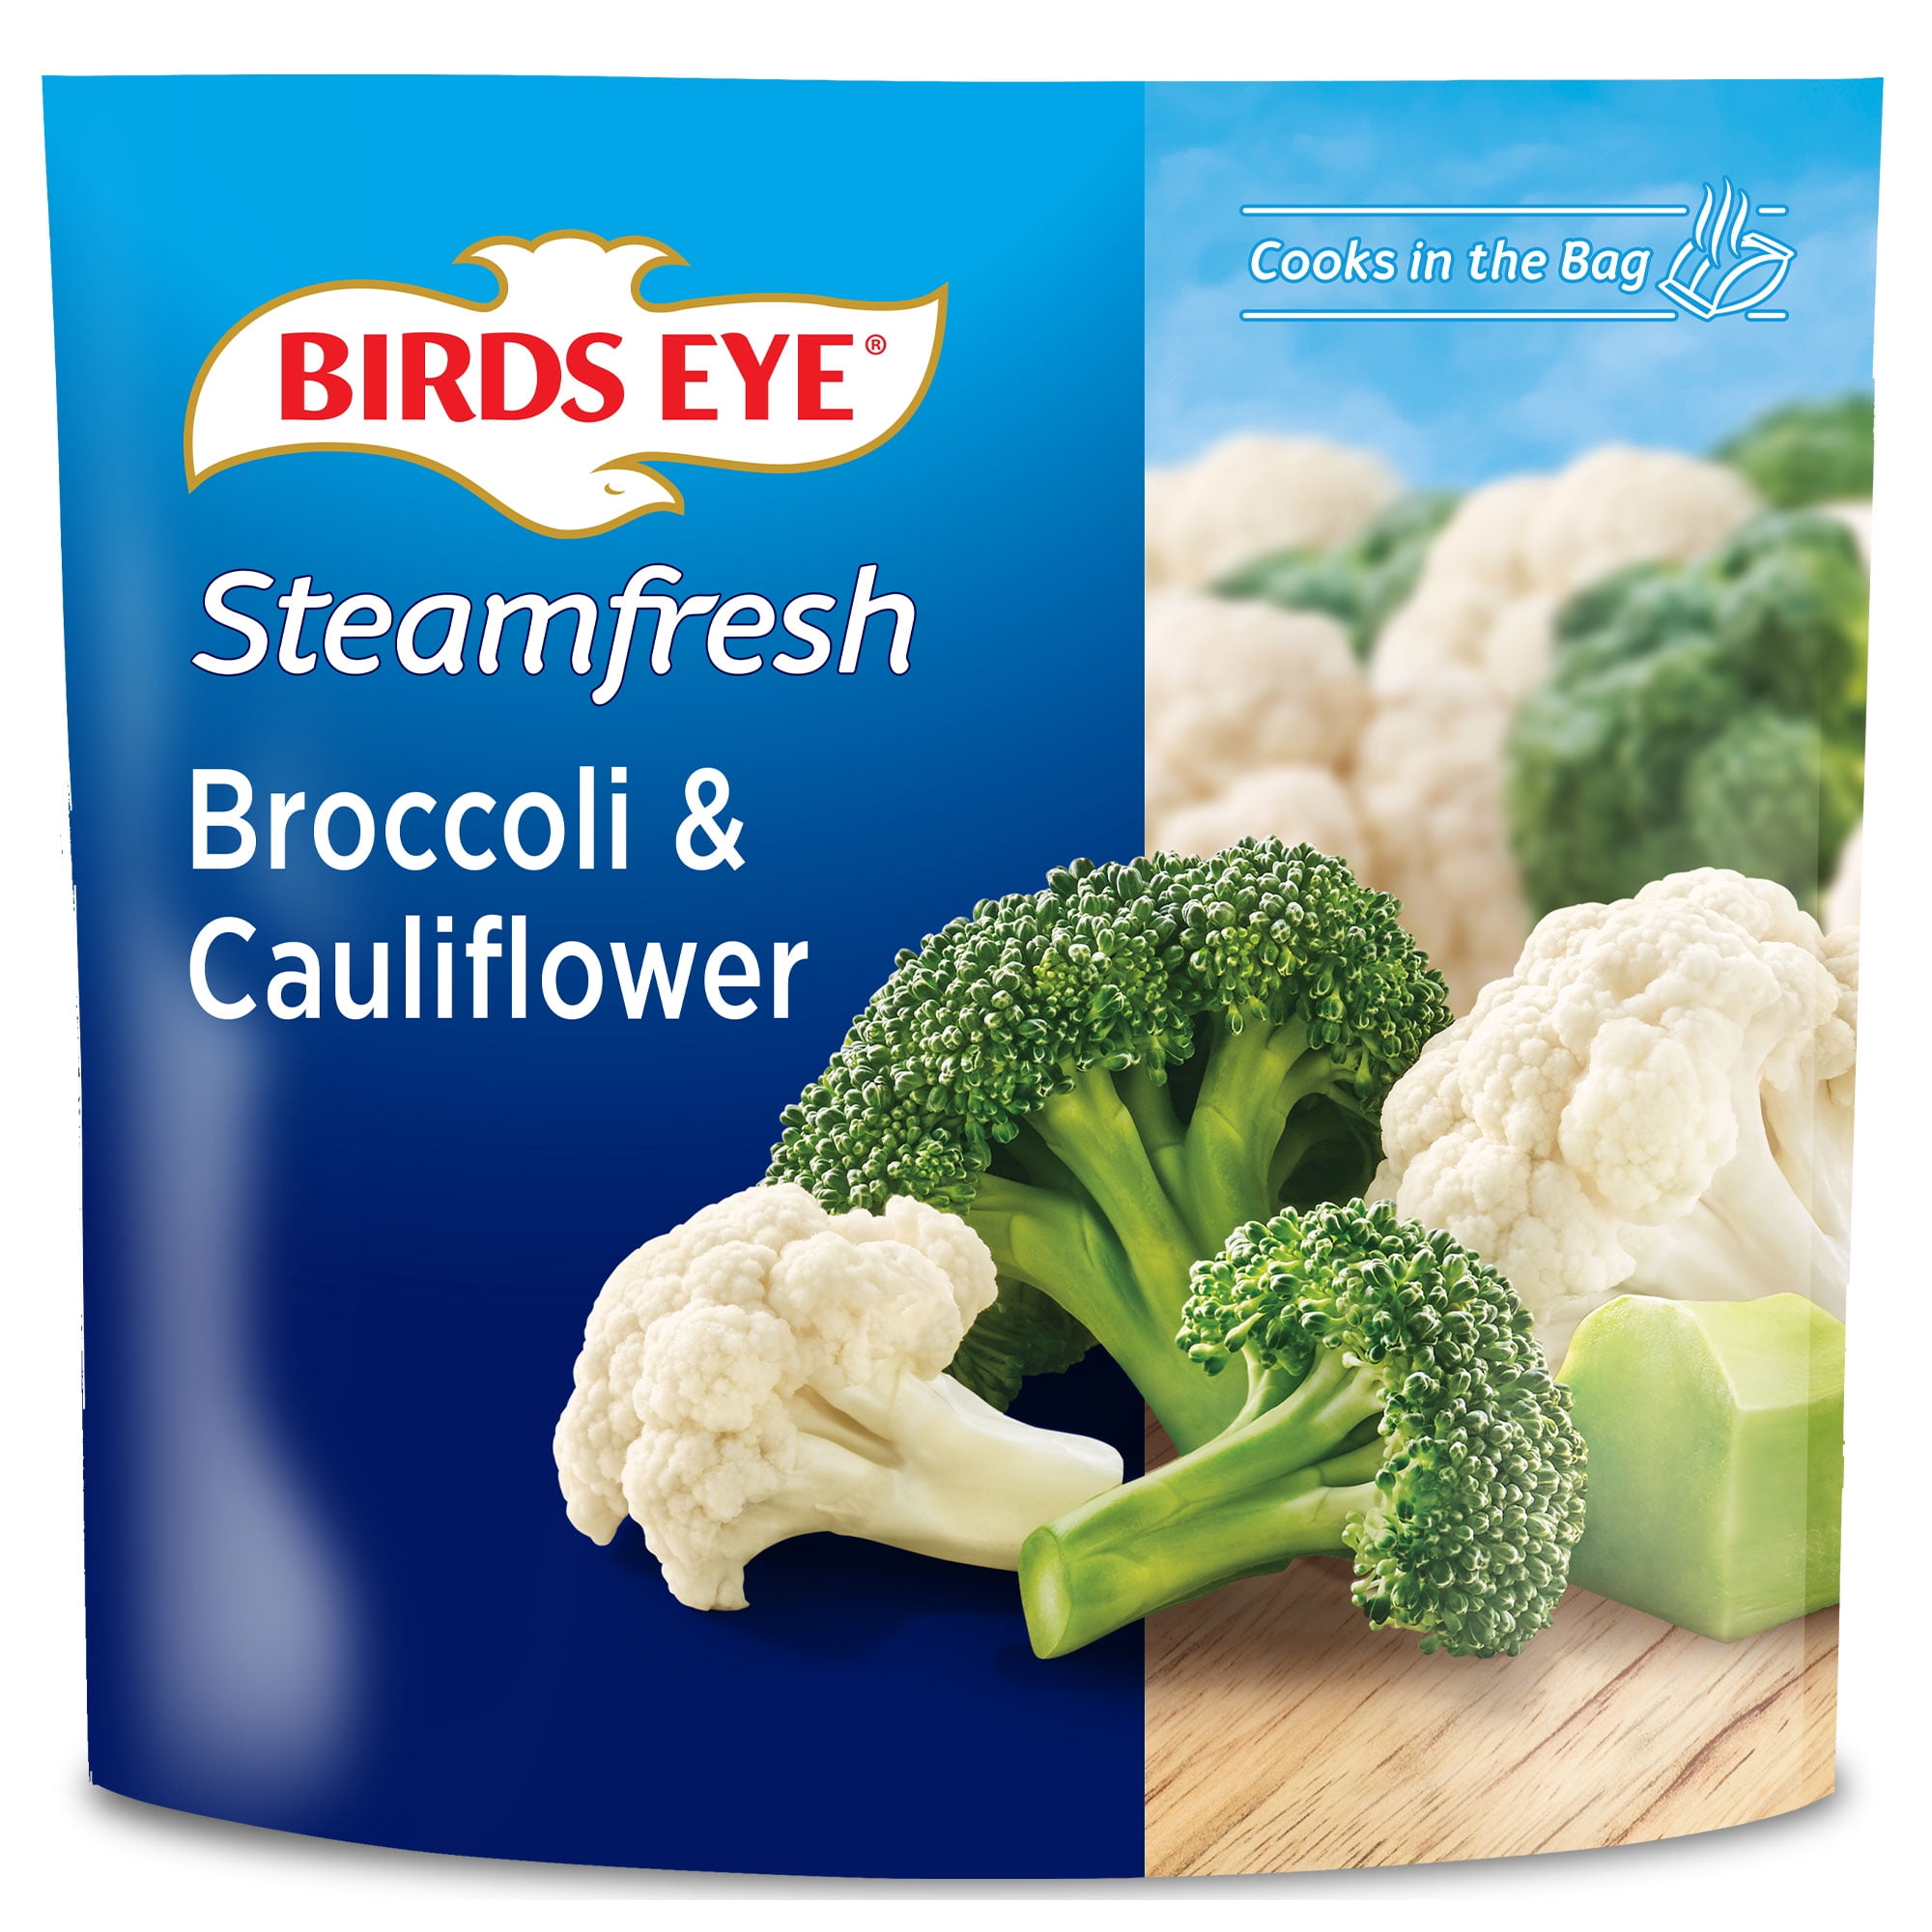 Birds Eye Steamfresh Broccoli & Cauliflower, Frozen, 10.8 oz